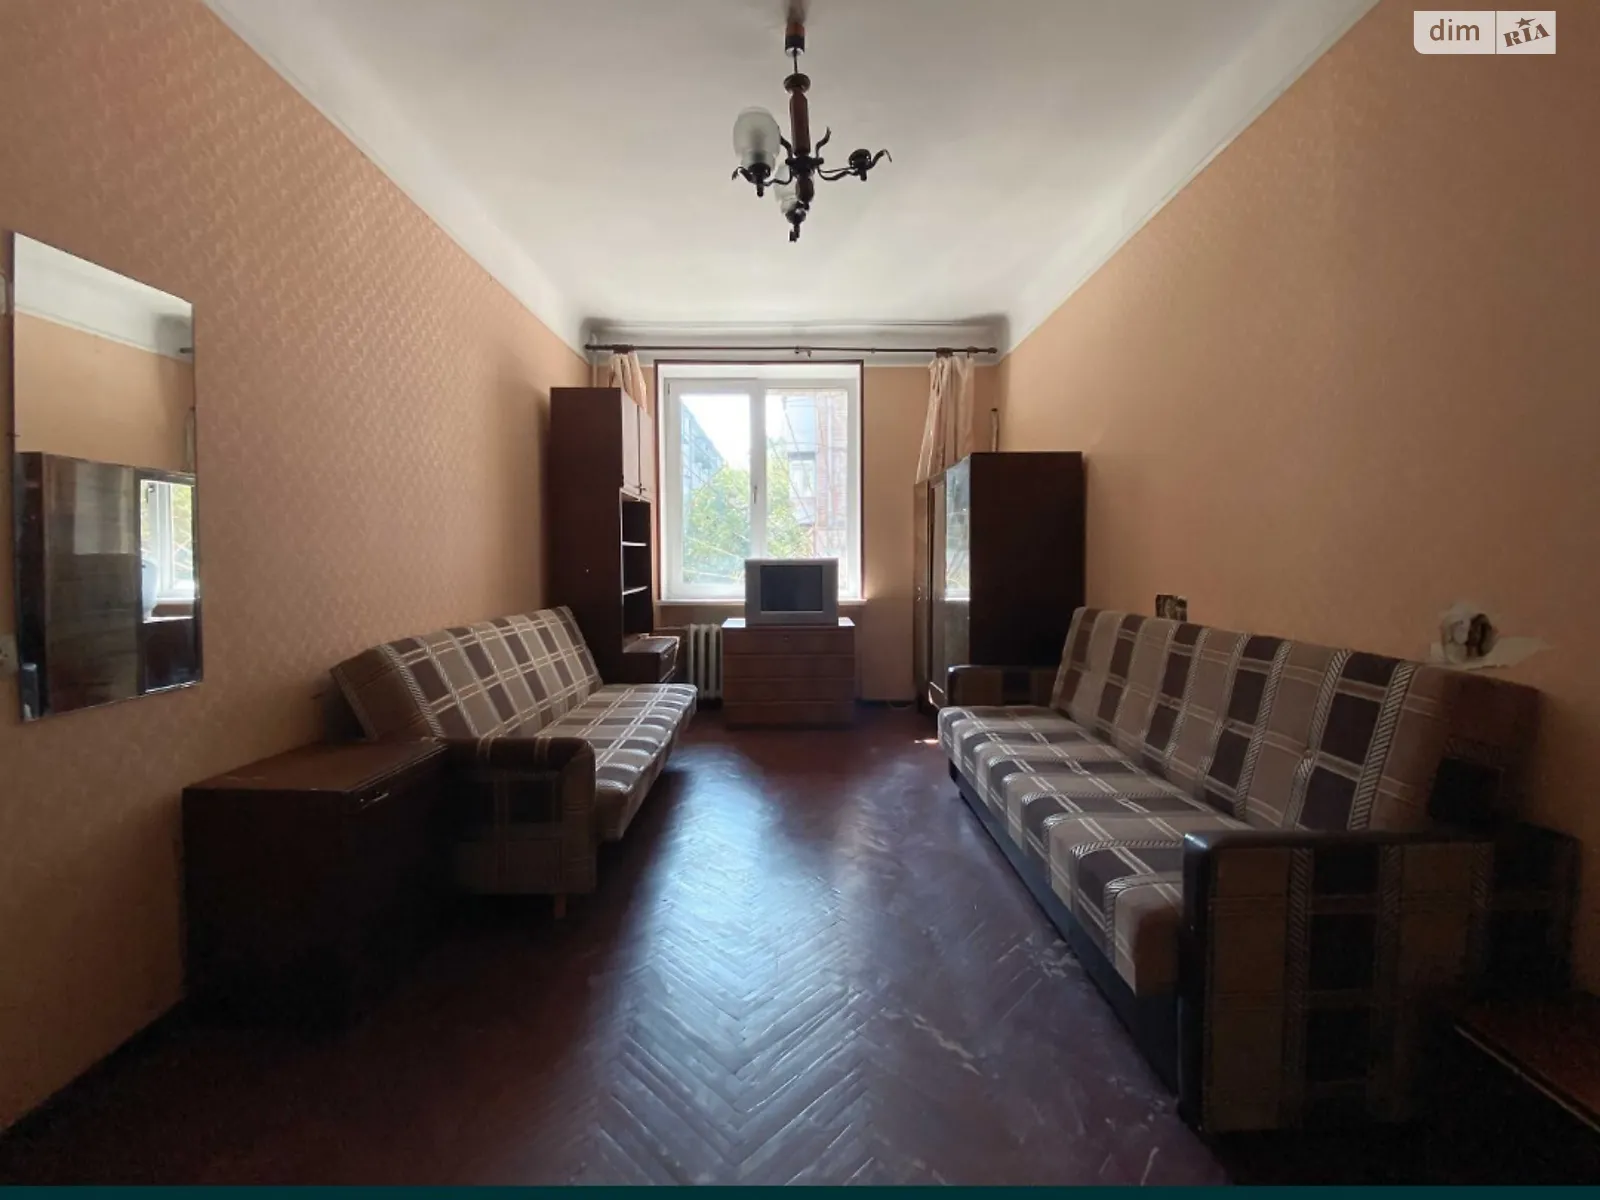 Продается комната 27 кв. м в Киеве, цена: 19000 $ - фото 1